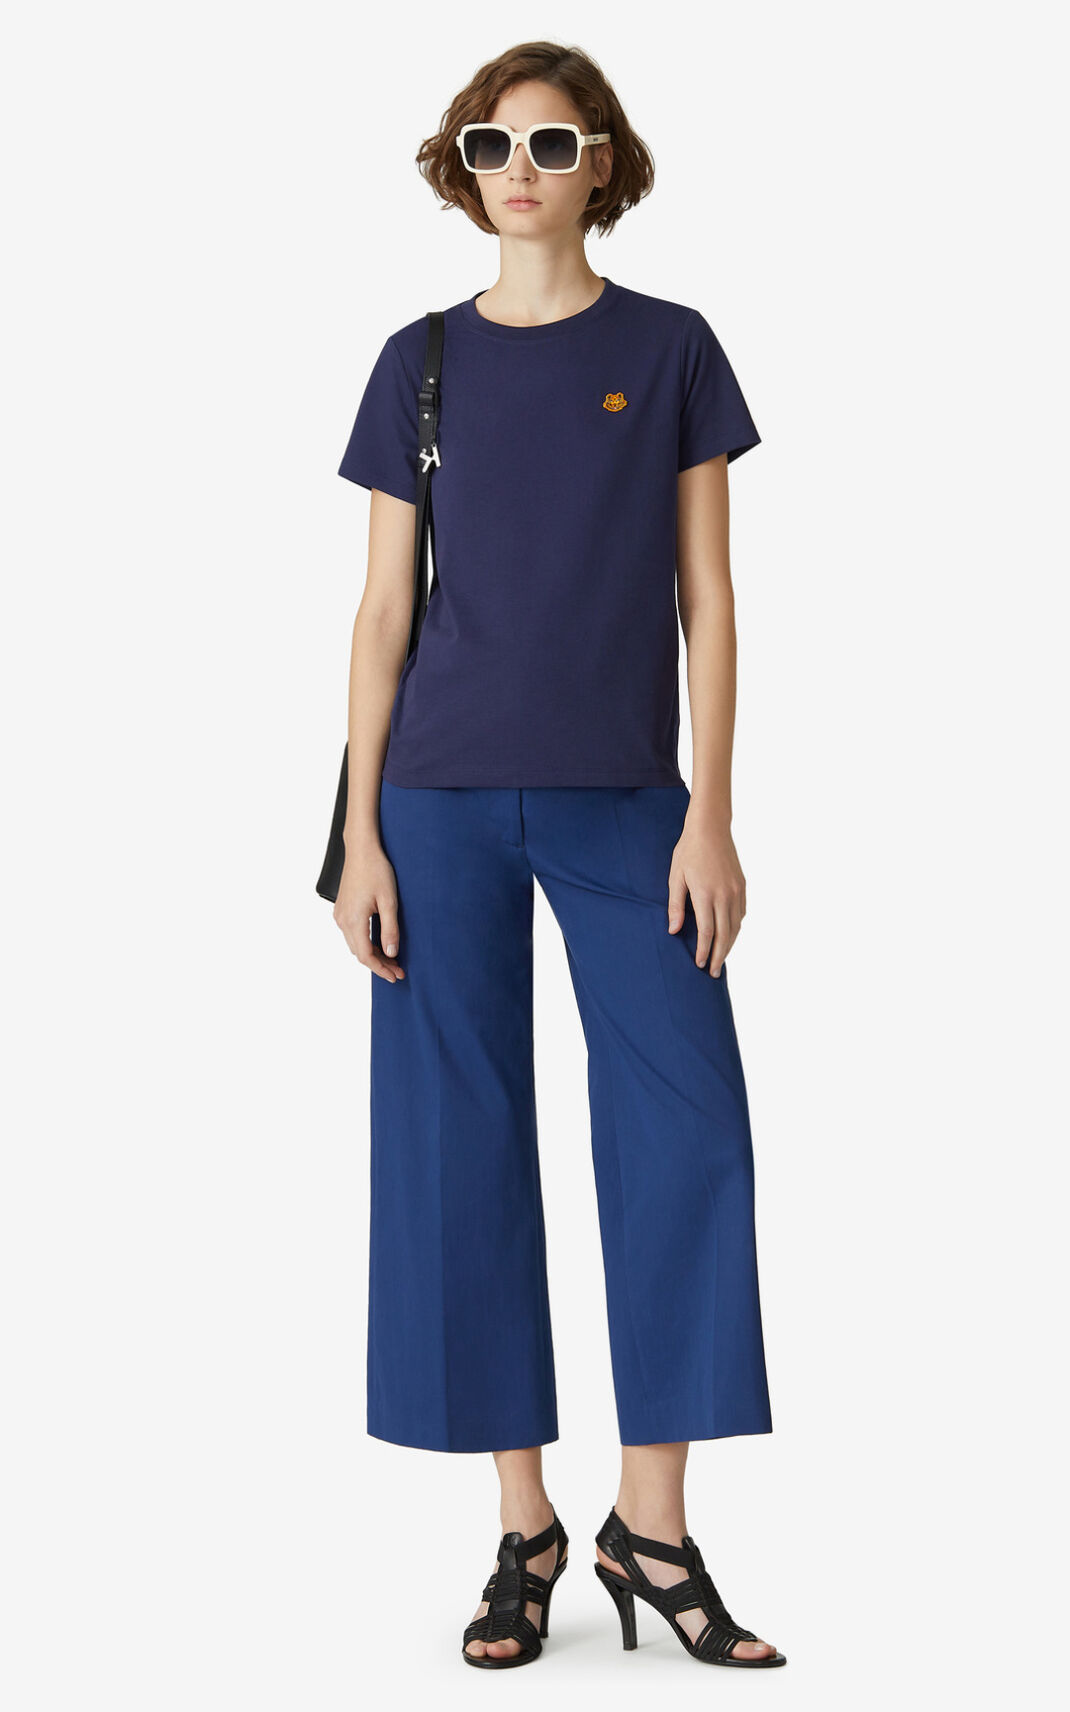 Kenzo Tiger Crest T Shirt Navy Blue For Womens 4830FKTIL